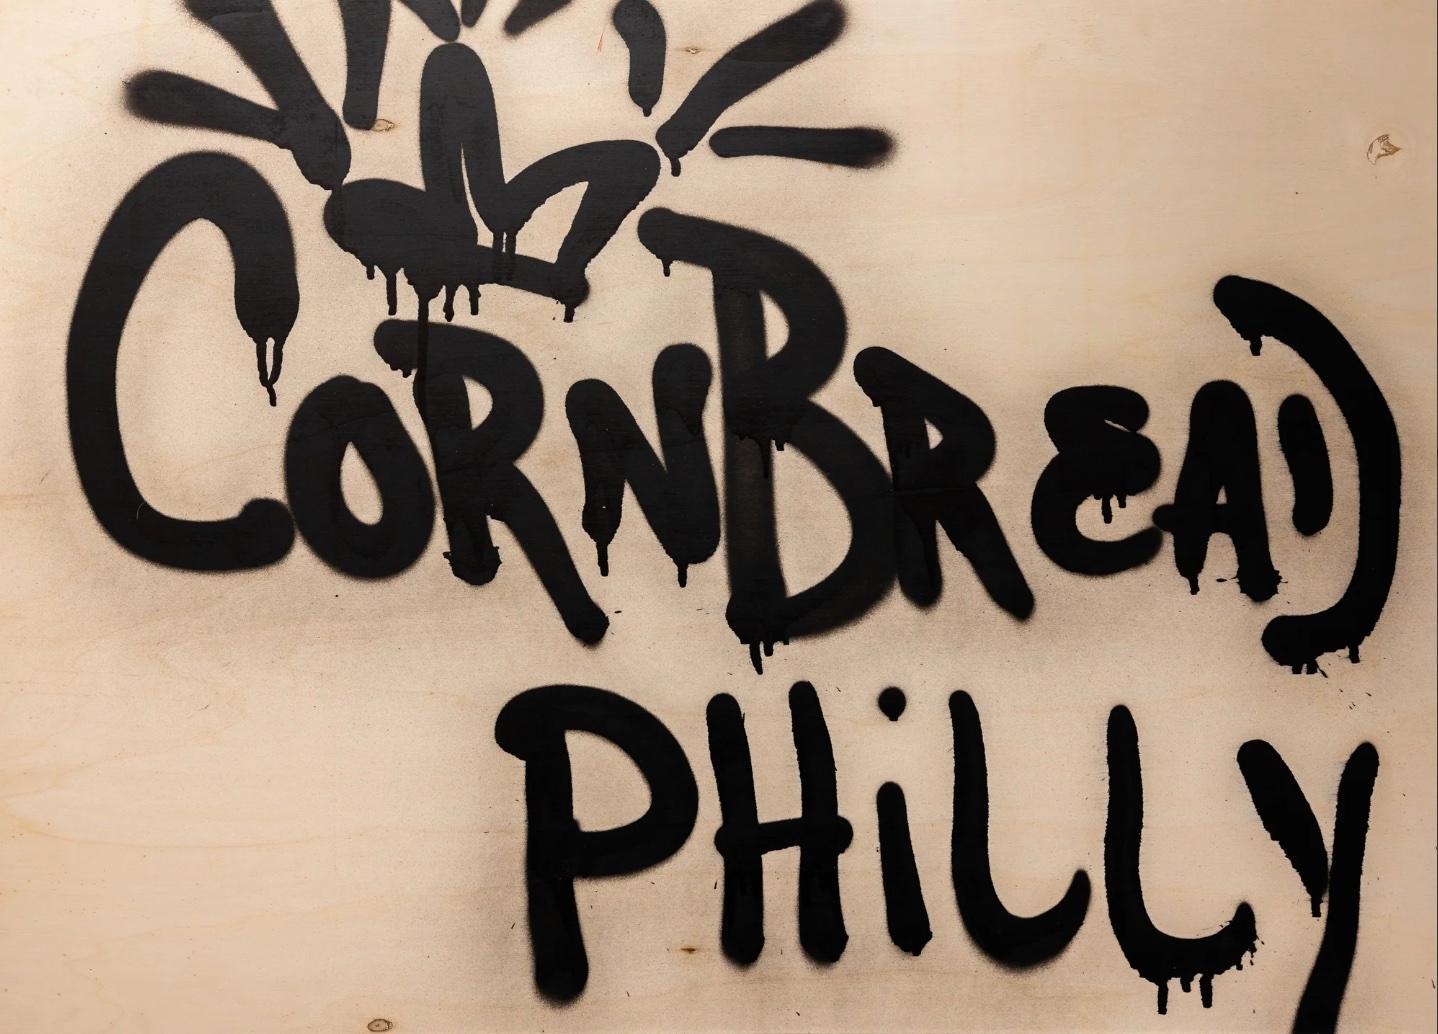 "Fresh Cut: Cornbread Philly", Acrylic on Wood, Graffiti, Street Art